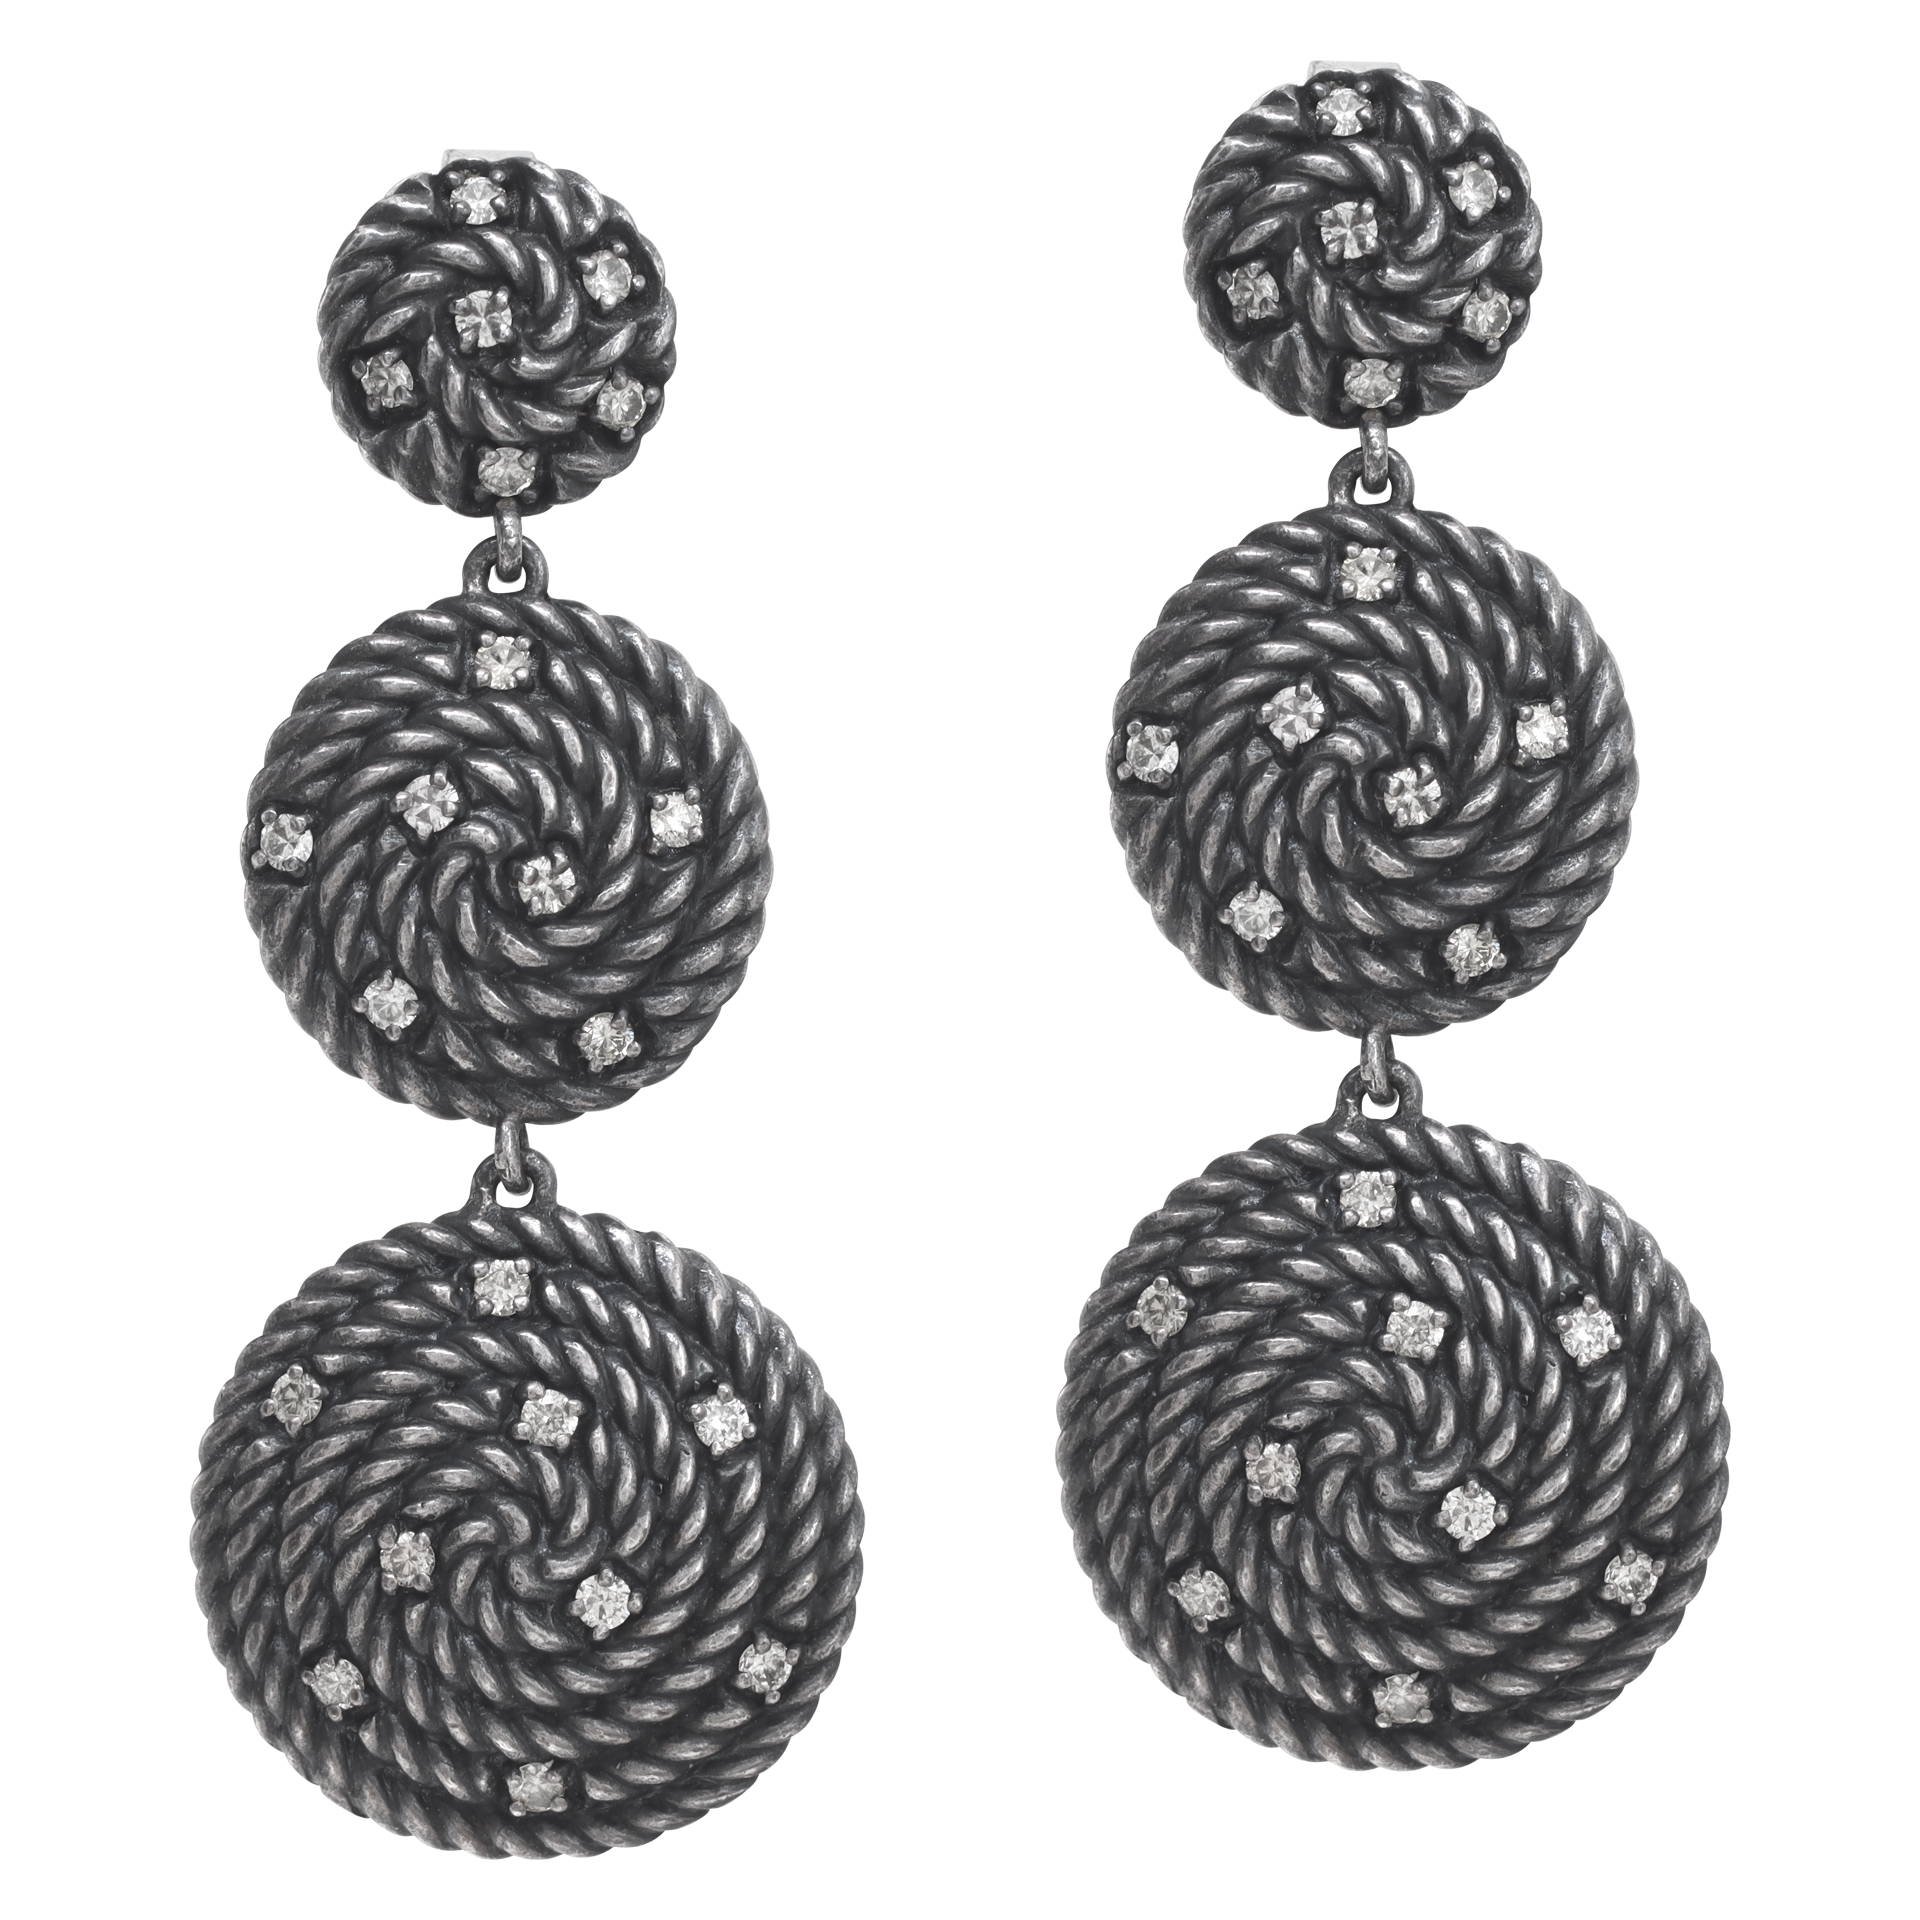 David Yurman coil earrings in sterling silver with diamonds (Stones)